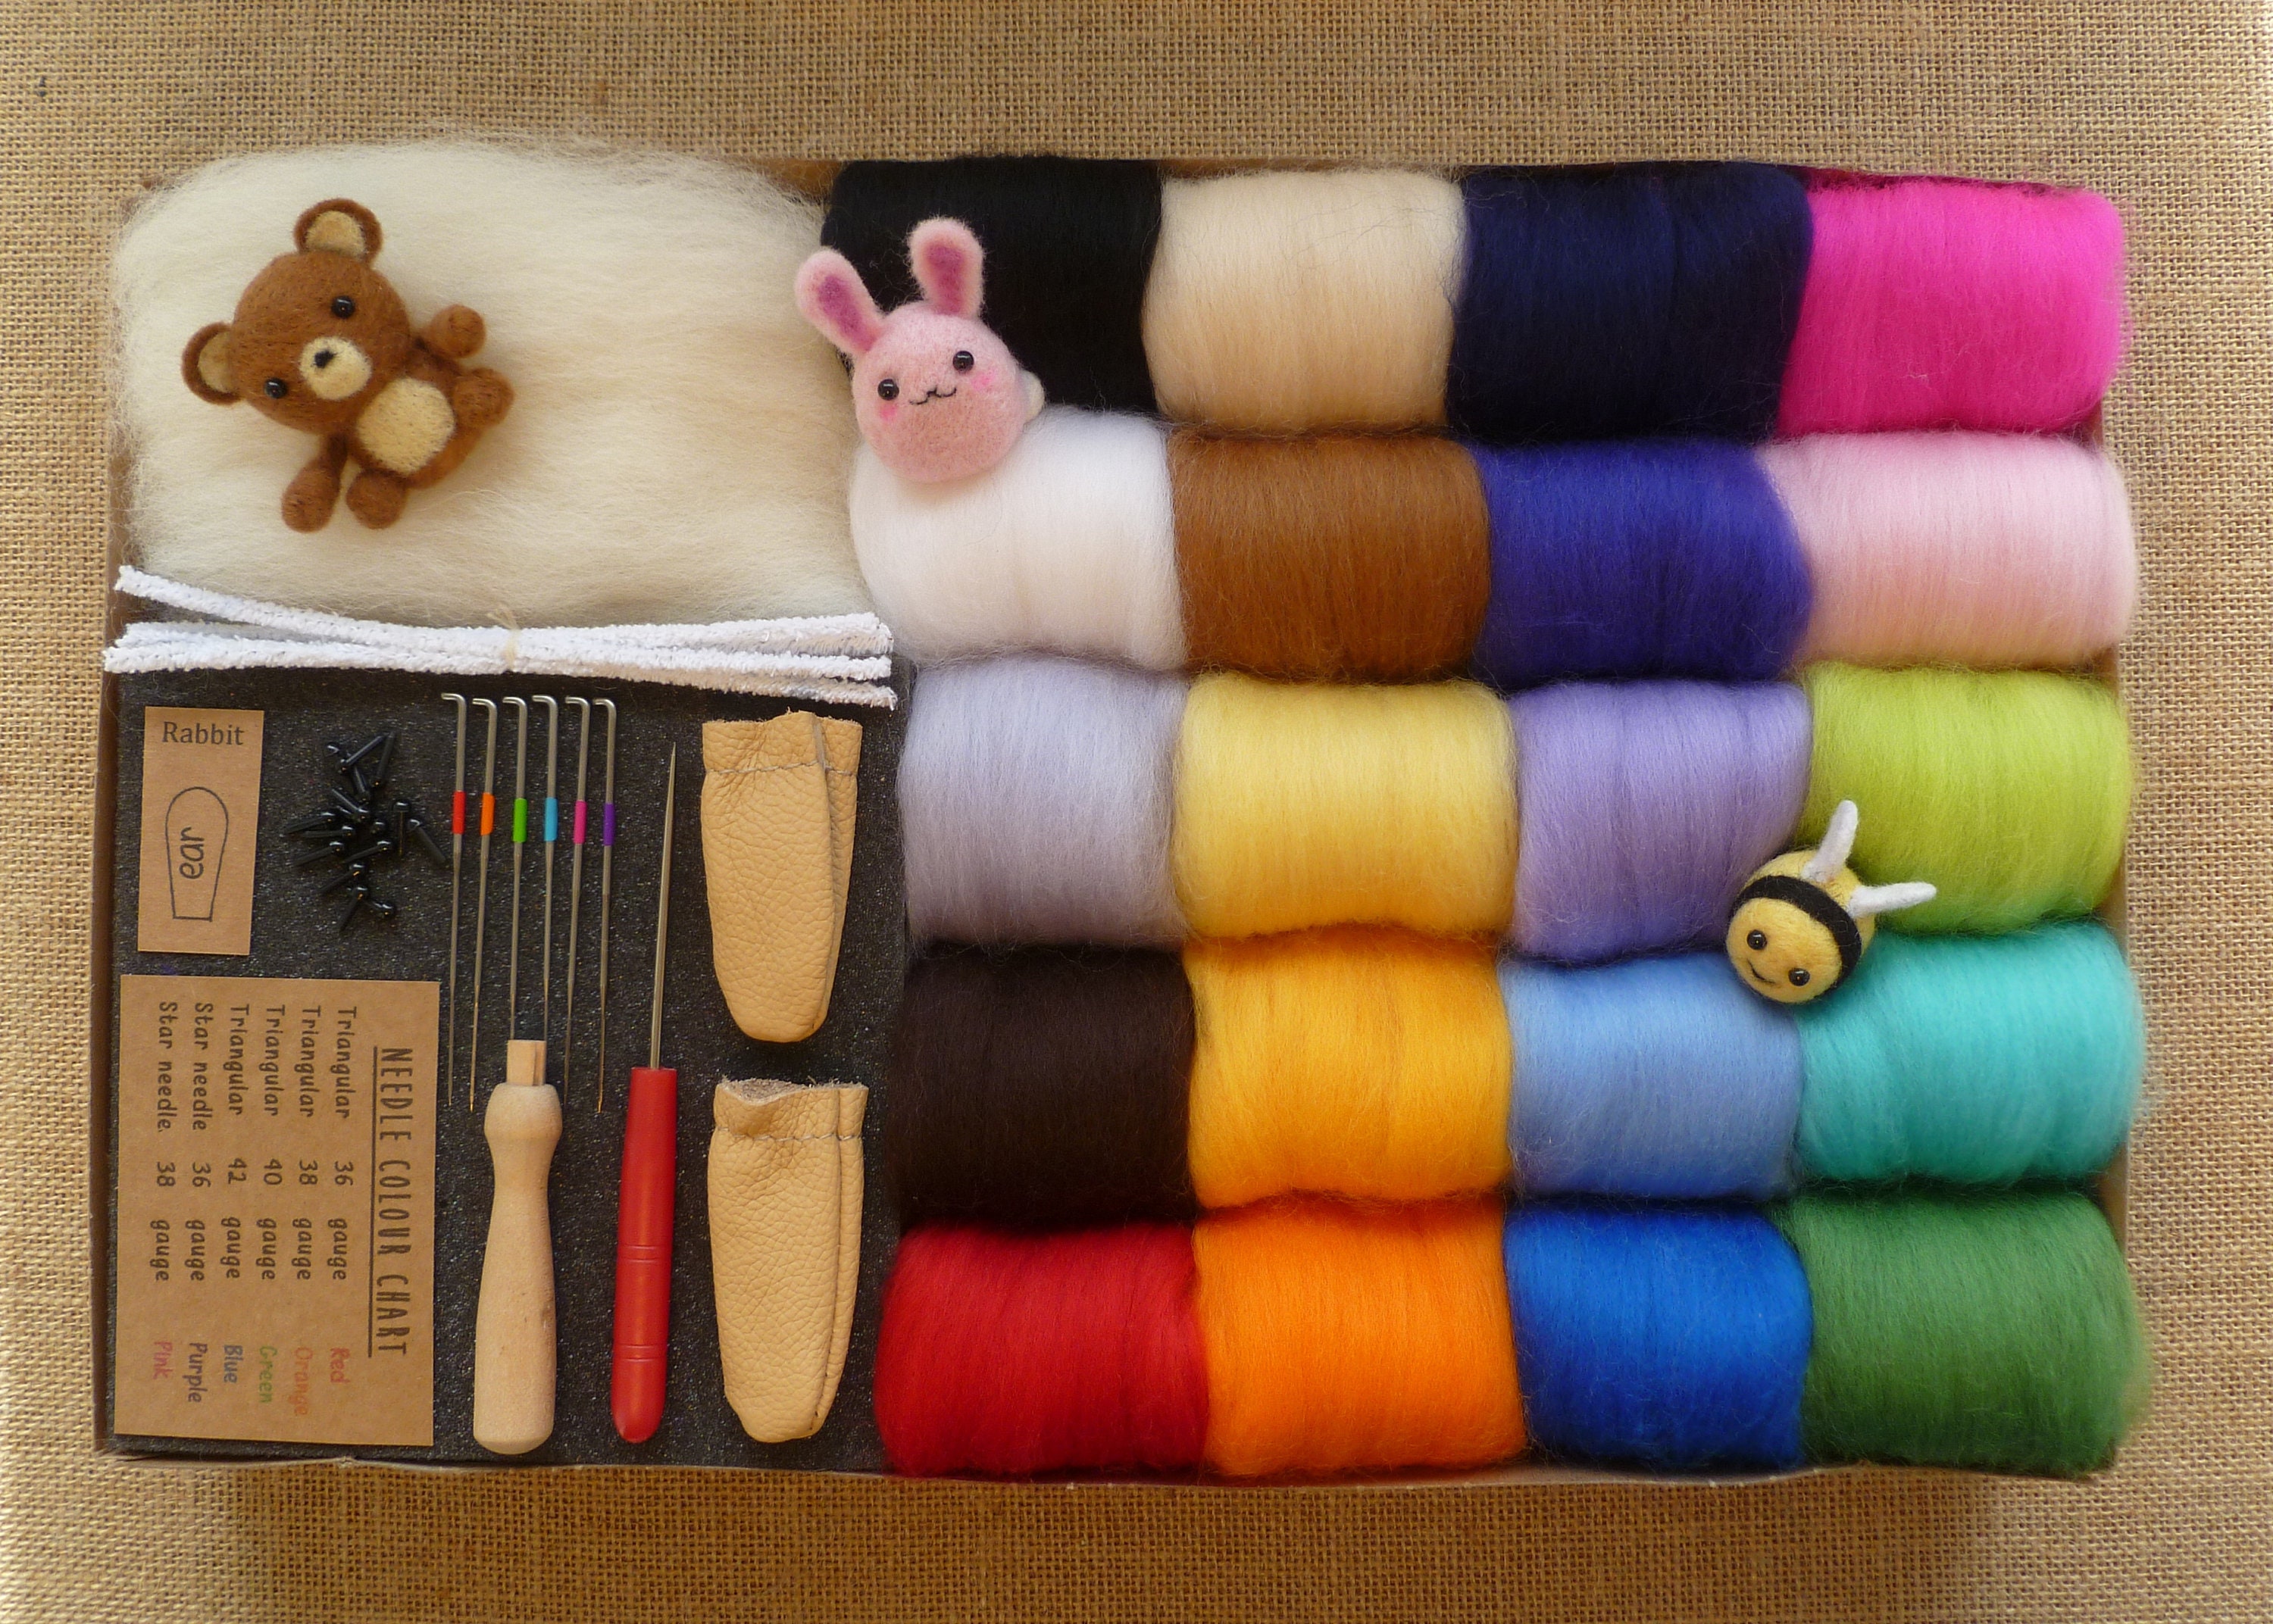 Needle Felting Kit, 40 Colors Wool Roving Fibre Yarn, Complete Needle  Felting Starter Kit with Basic Felt Tools and Supplies Instructions for DIY Needle  Felting 